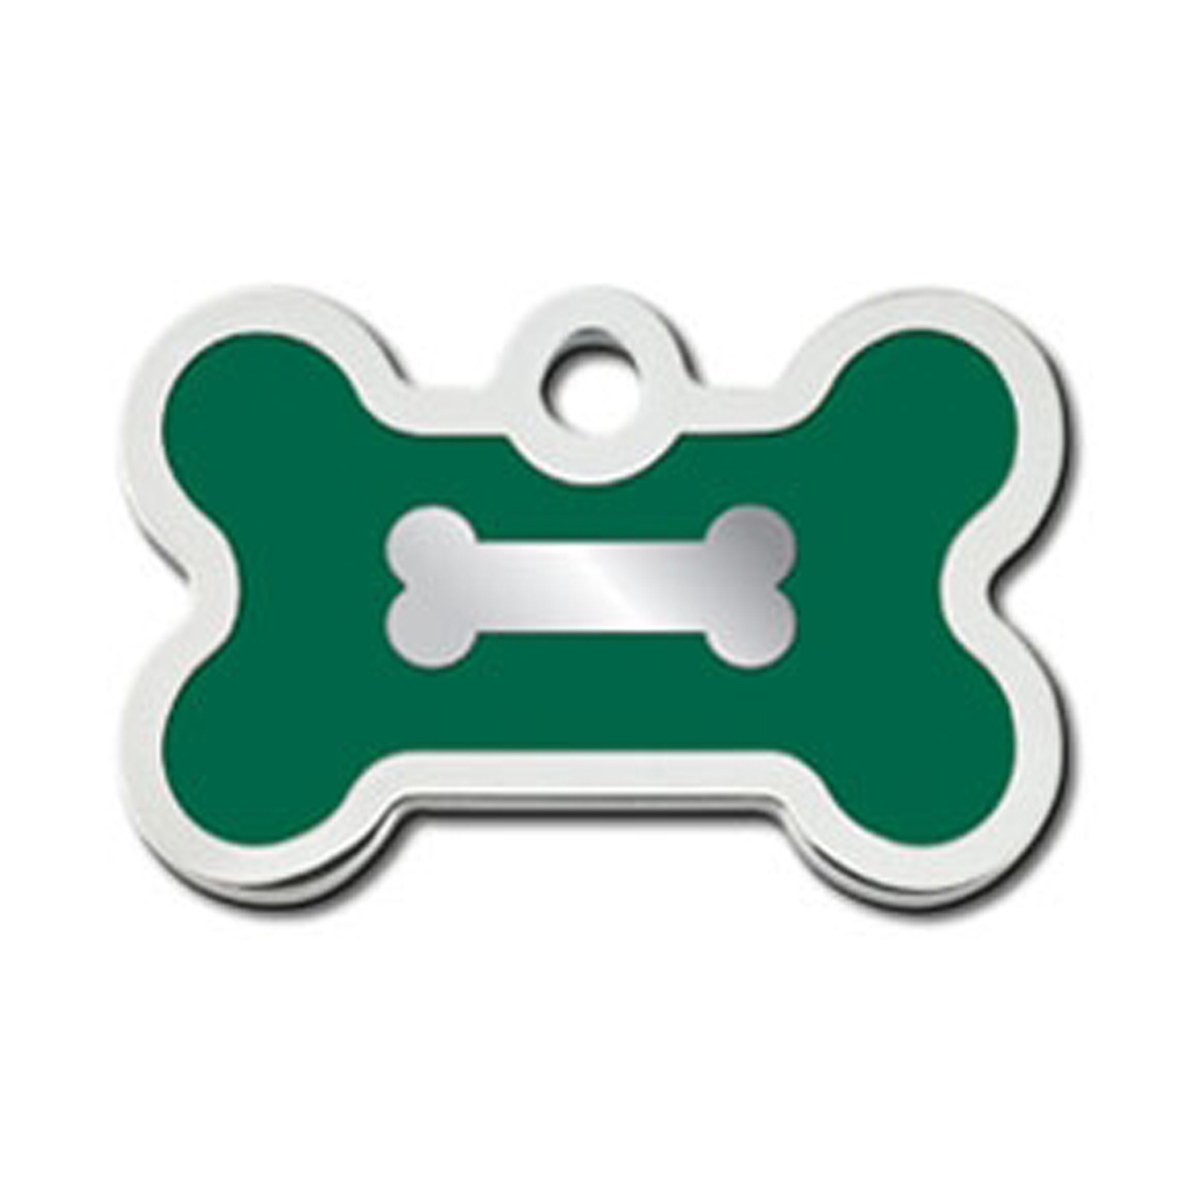 Bone Small Engravable Pet I.D. Tag - Chrome and Emerald Green